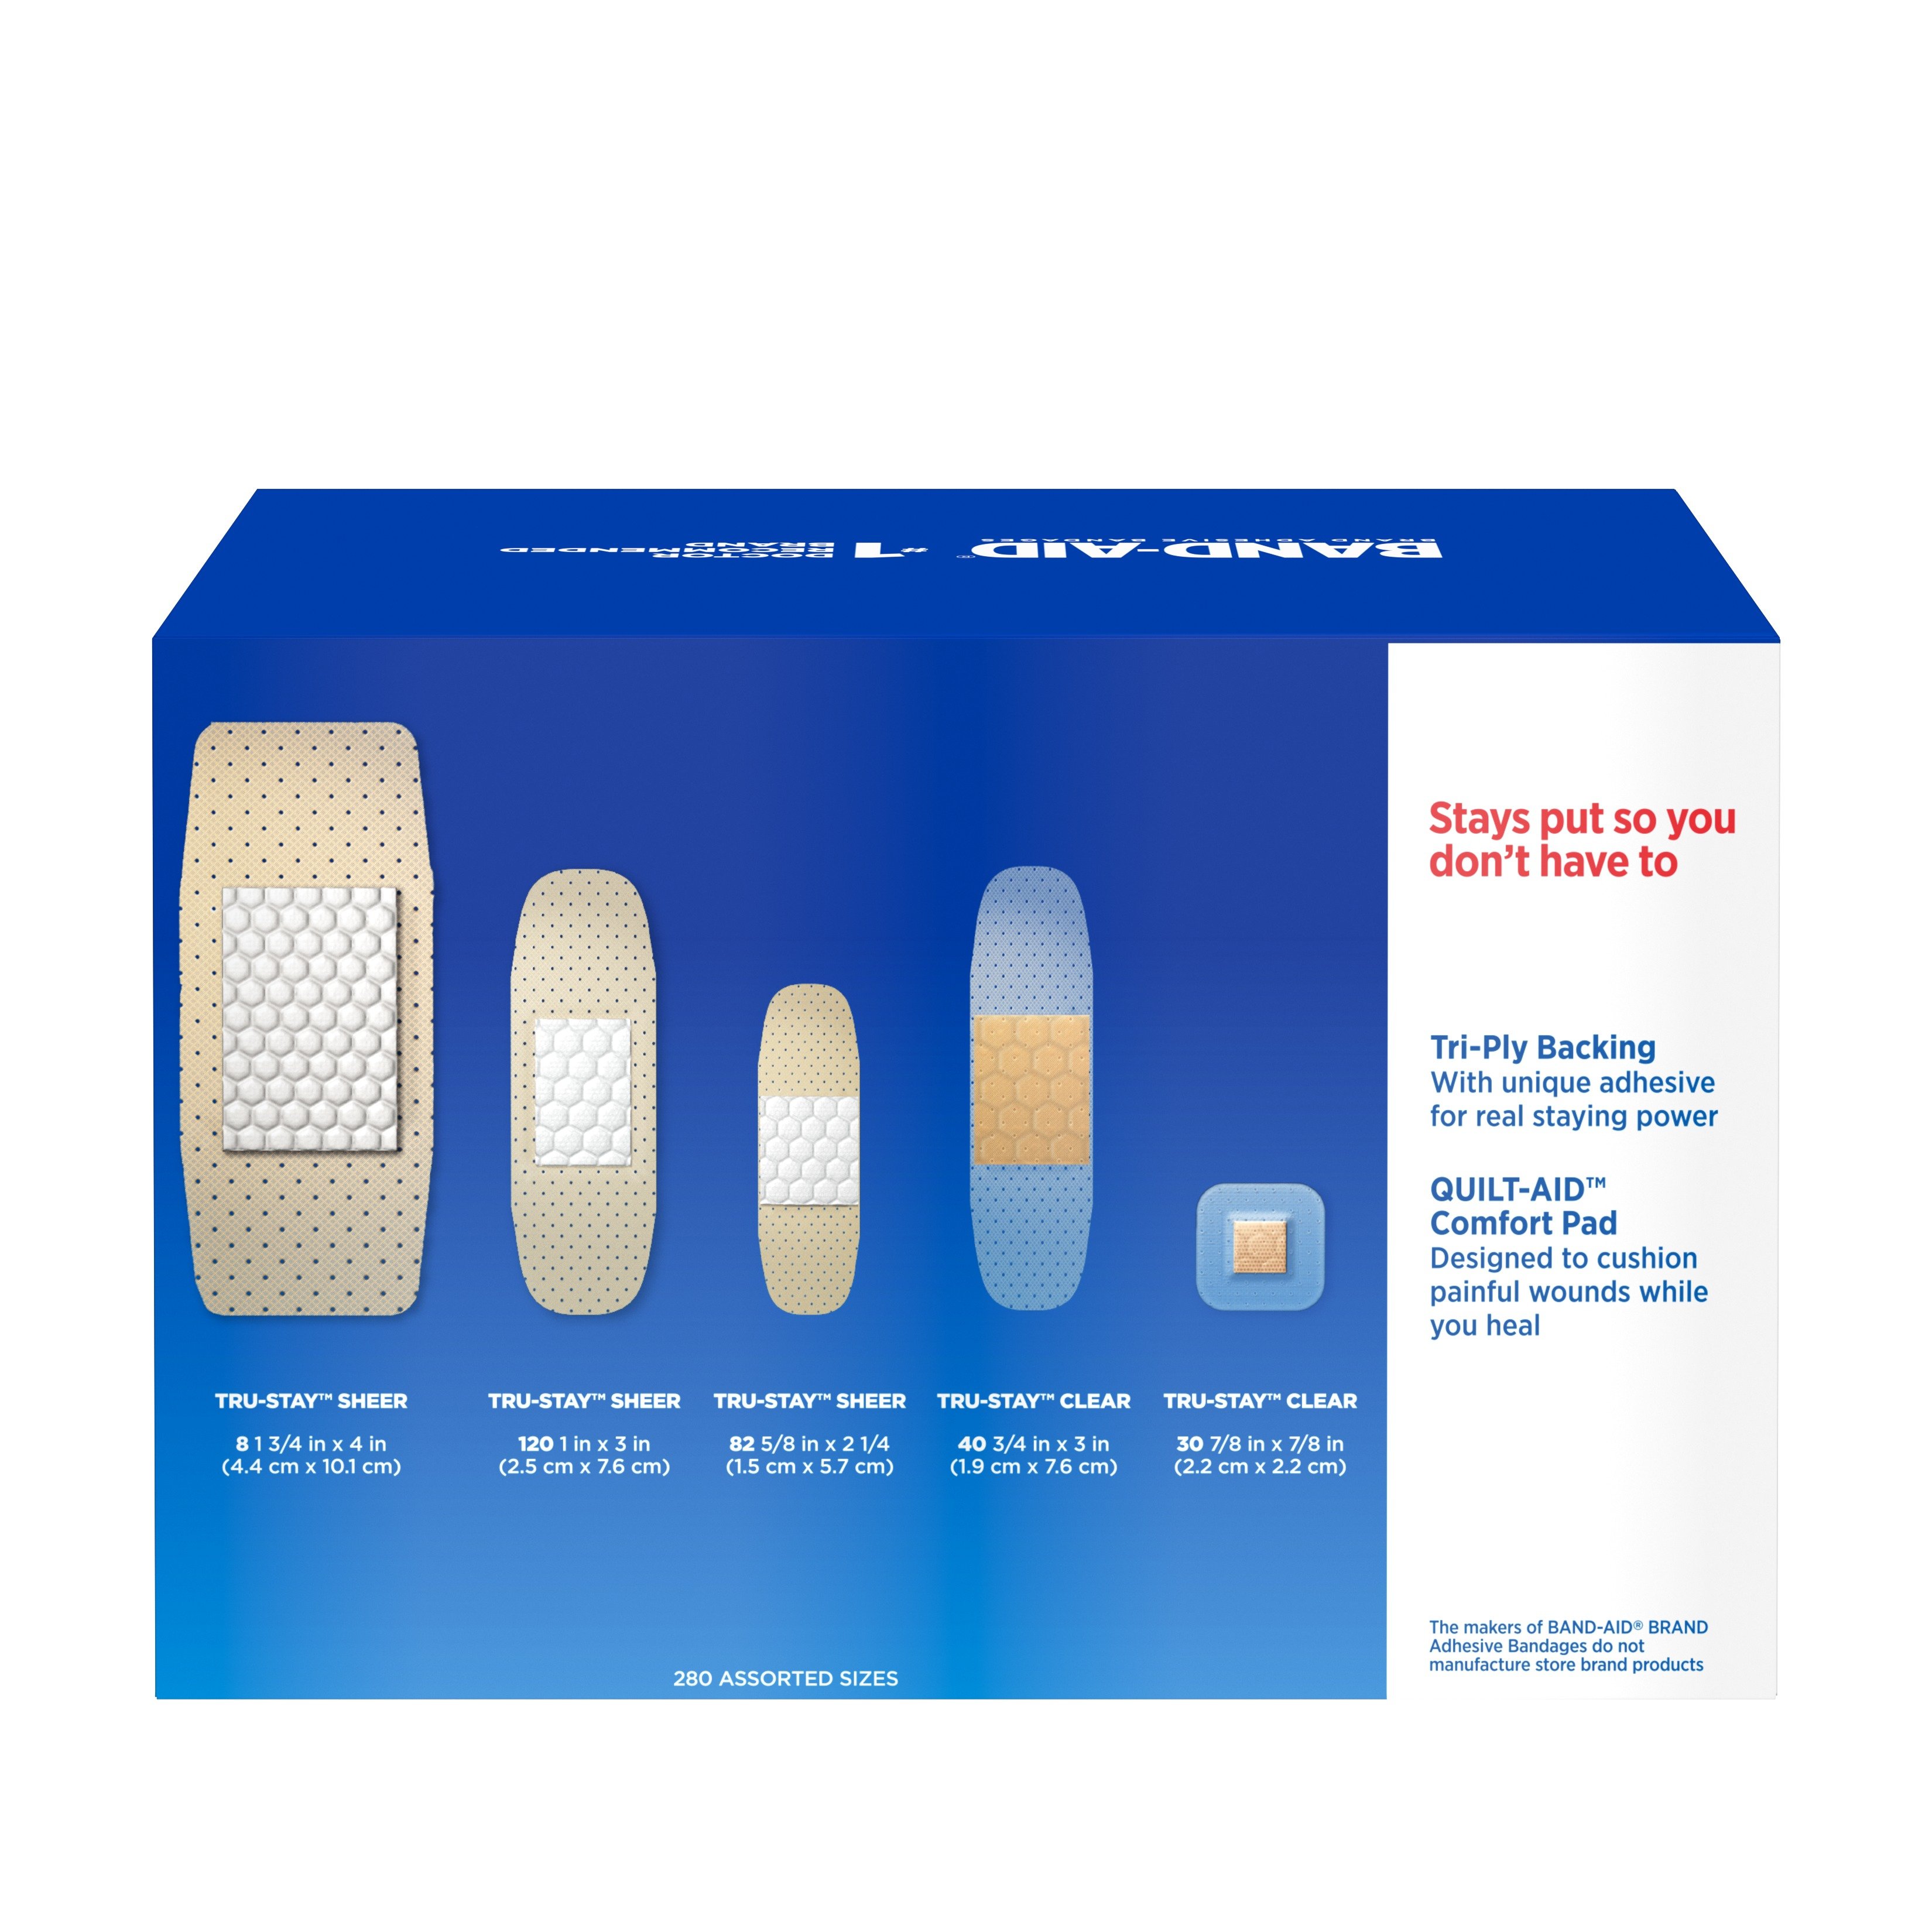 TRU-STAY™ SHEER STRIPS COMFORT-FLEX® Bandages, 80 ccount